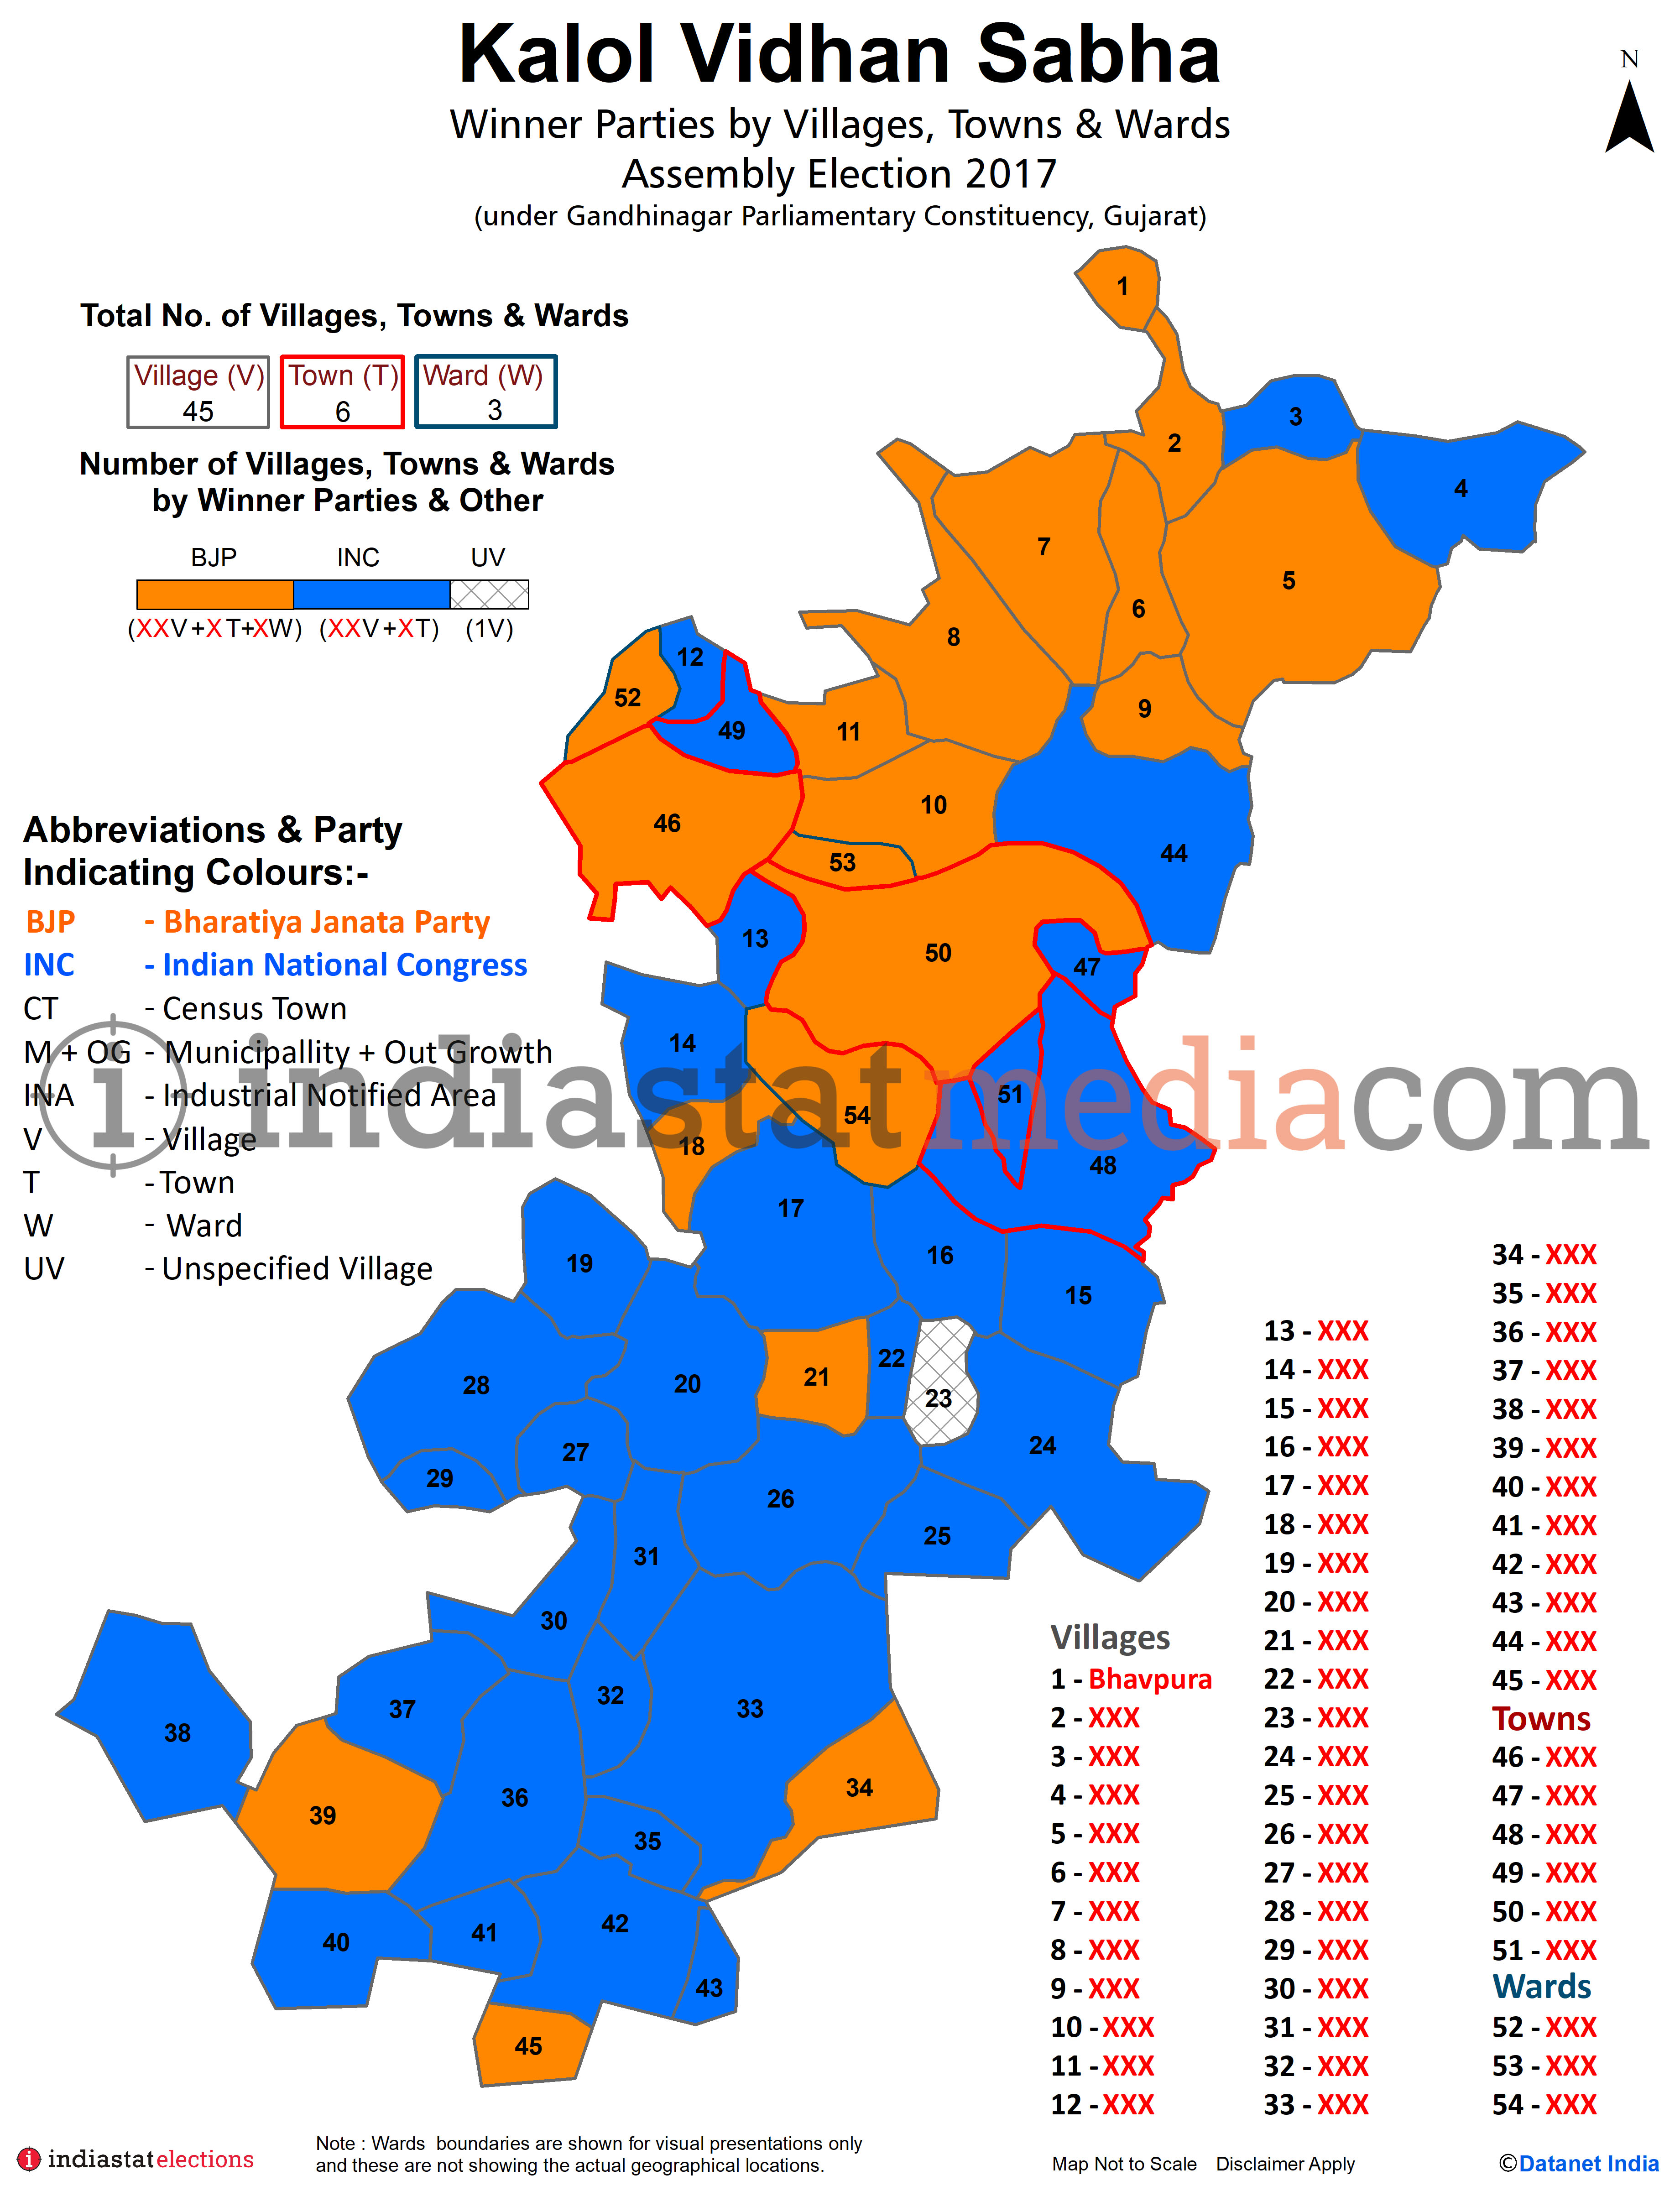 Winner Parties by Villages, Towns & Wards in Kalol Assembly Constituency under Gandhinagar Parliamentary Constituency in Gujarat (Assembly Election - 2017)